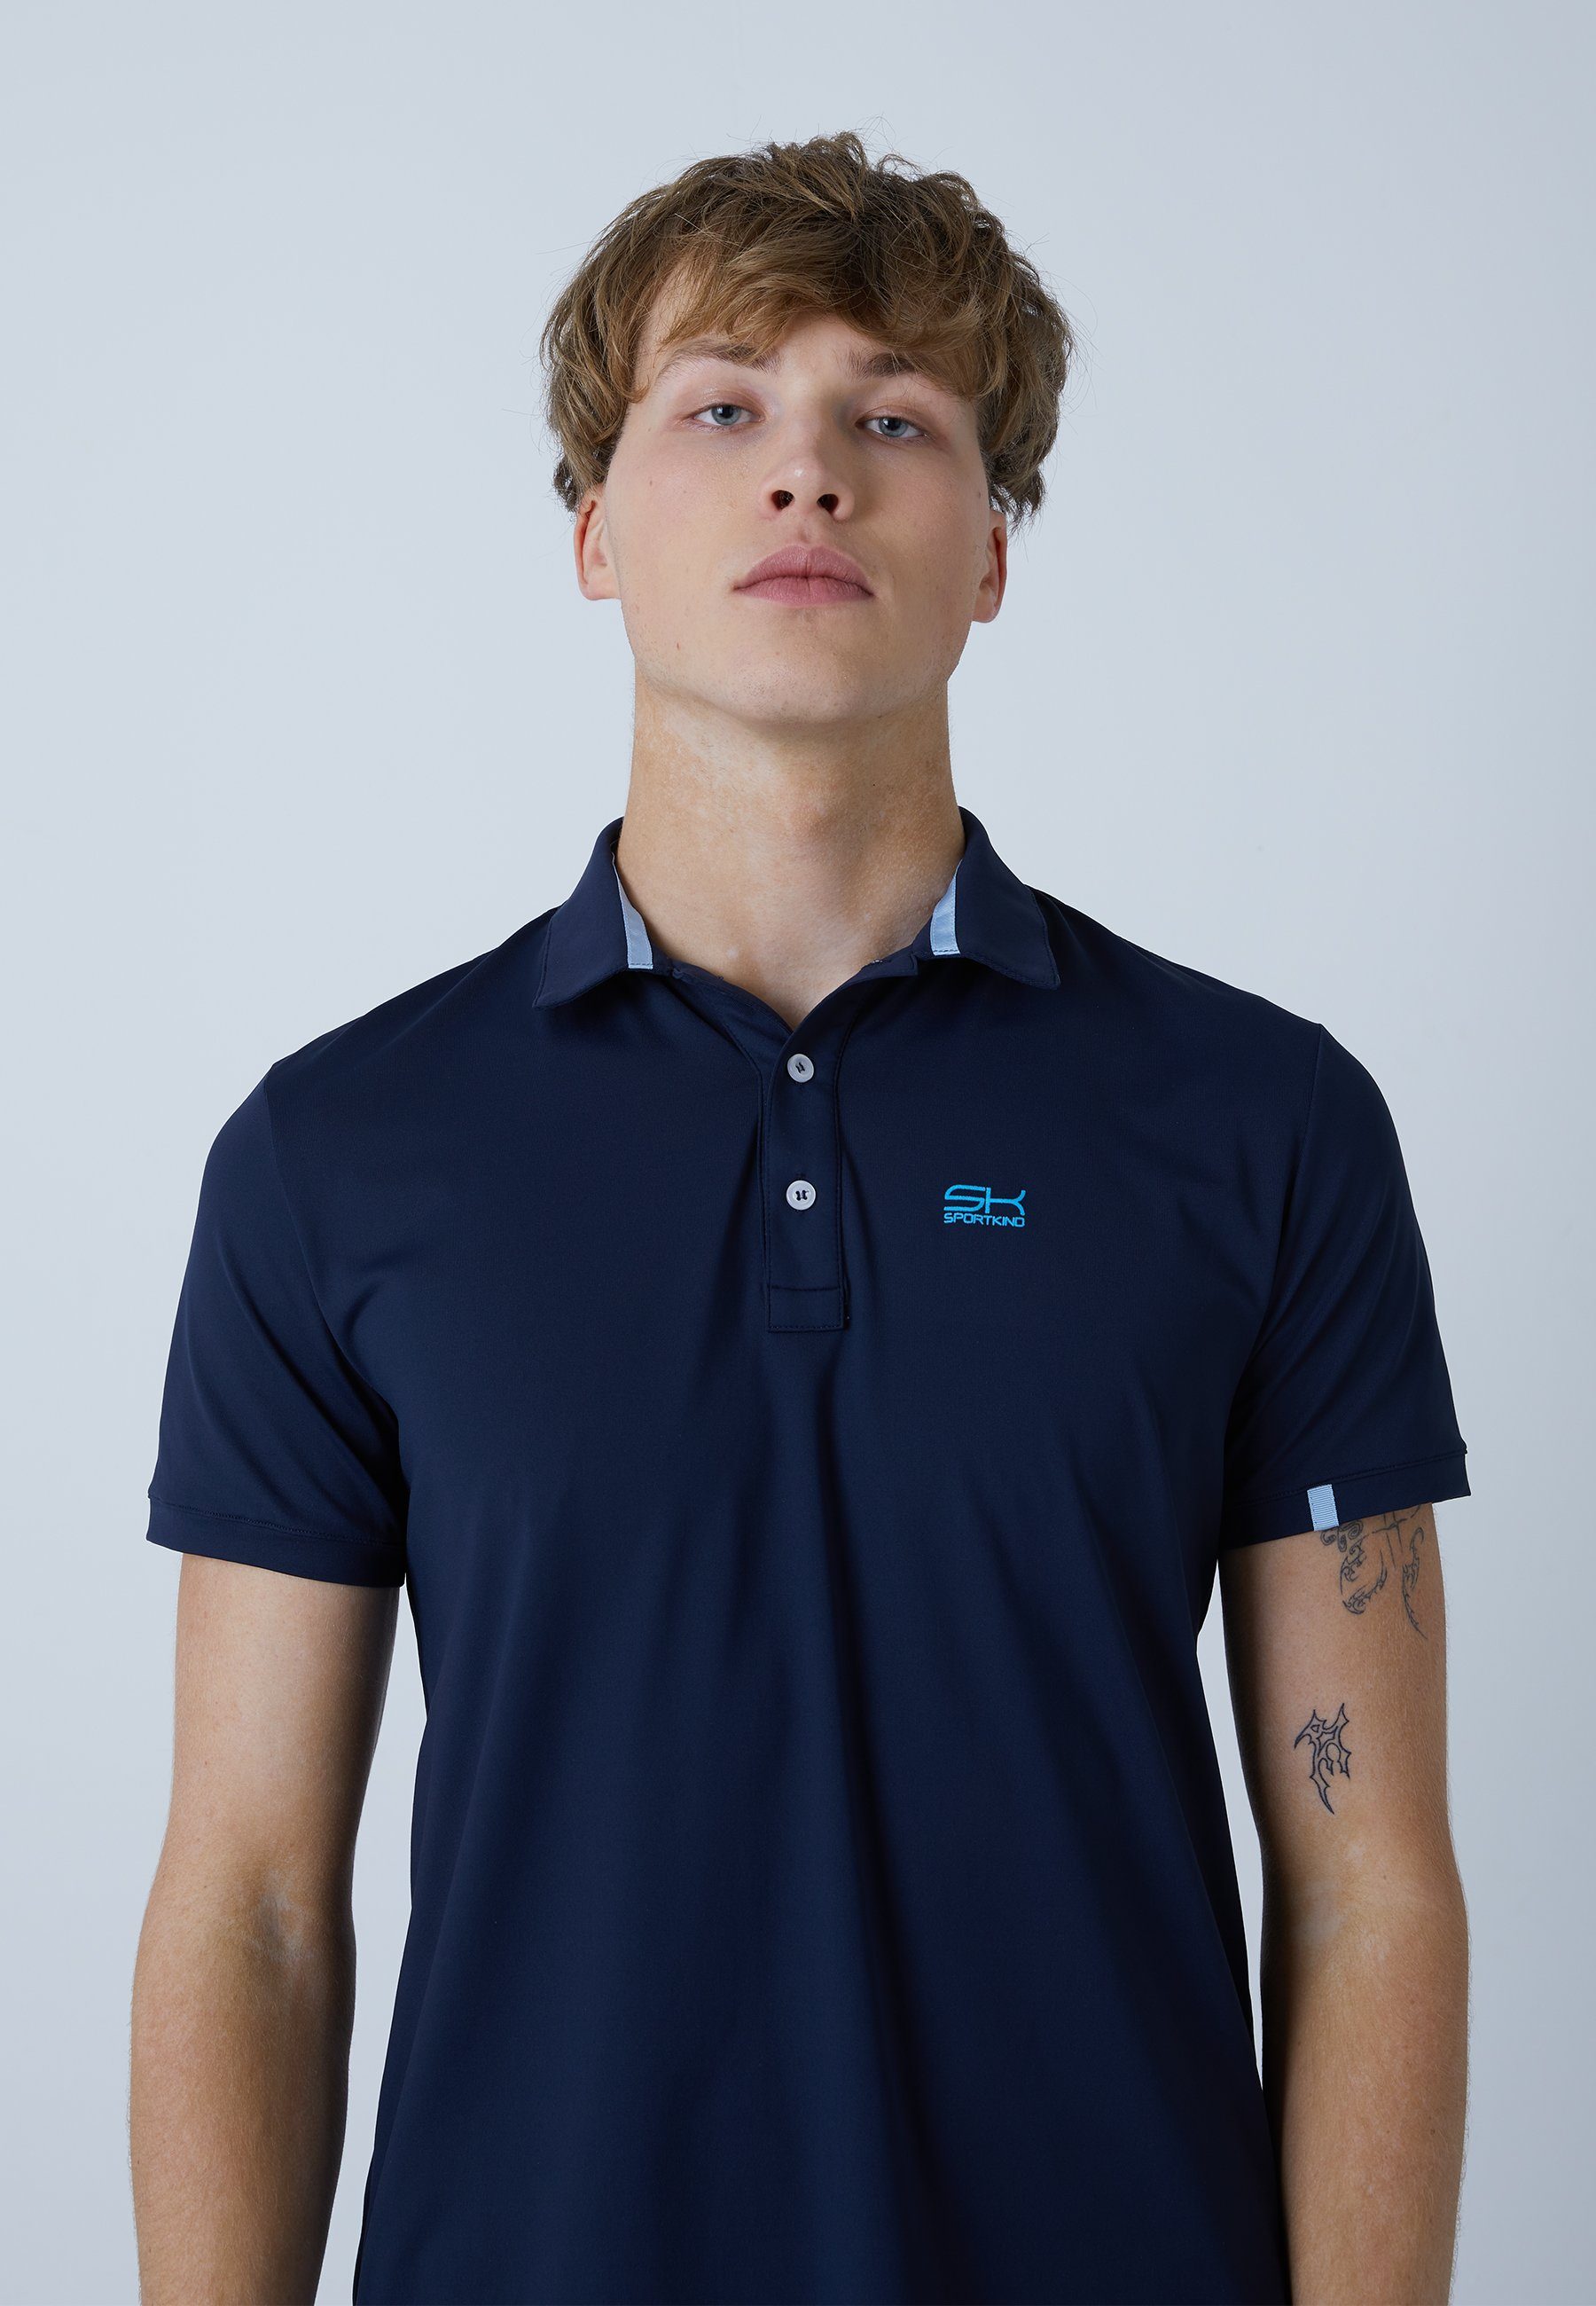 SPORTKIND Funktionsshirt Golf Polo Shirt Kurzarm Jungen & Herren navy blau | Funktionsshirts